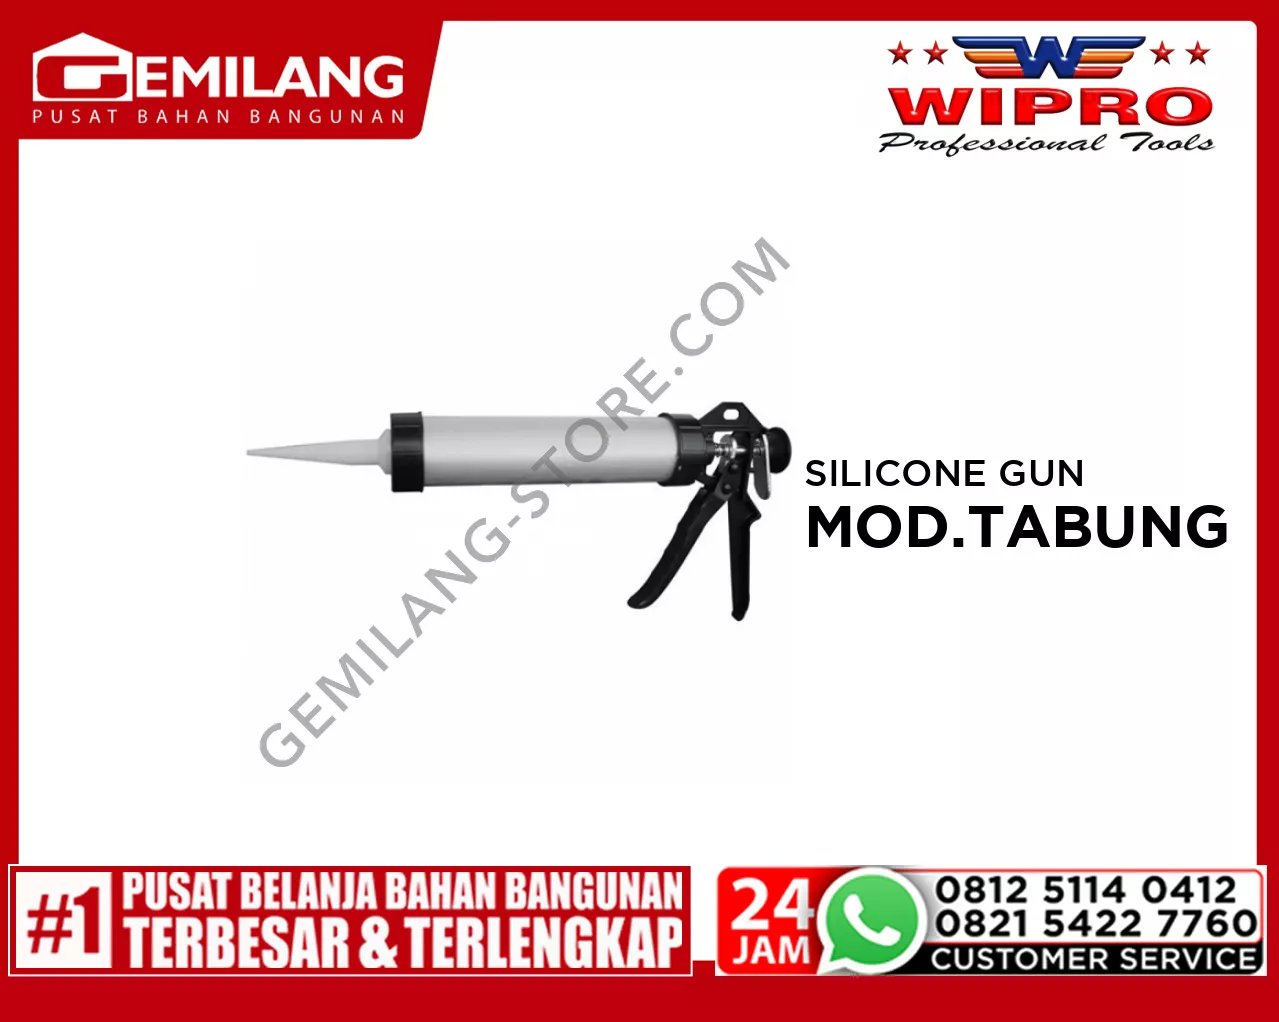 WIPRO SILICONE GUN TD99065 MOD.TABUNG